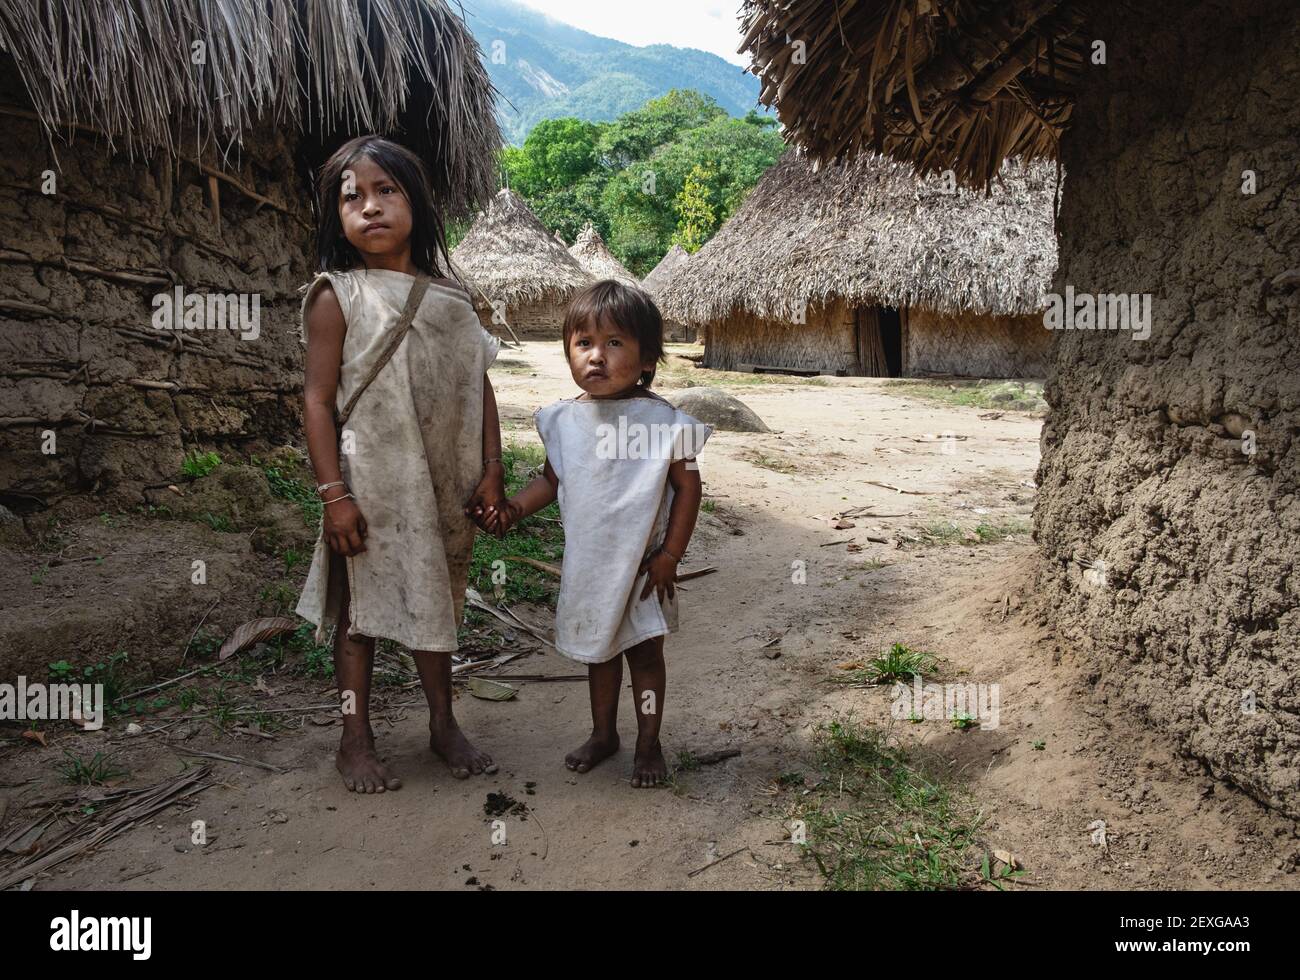 Two Kogi boys walk through their remote village in La Guajira, Colombia. Stock Photo